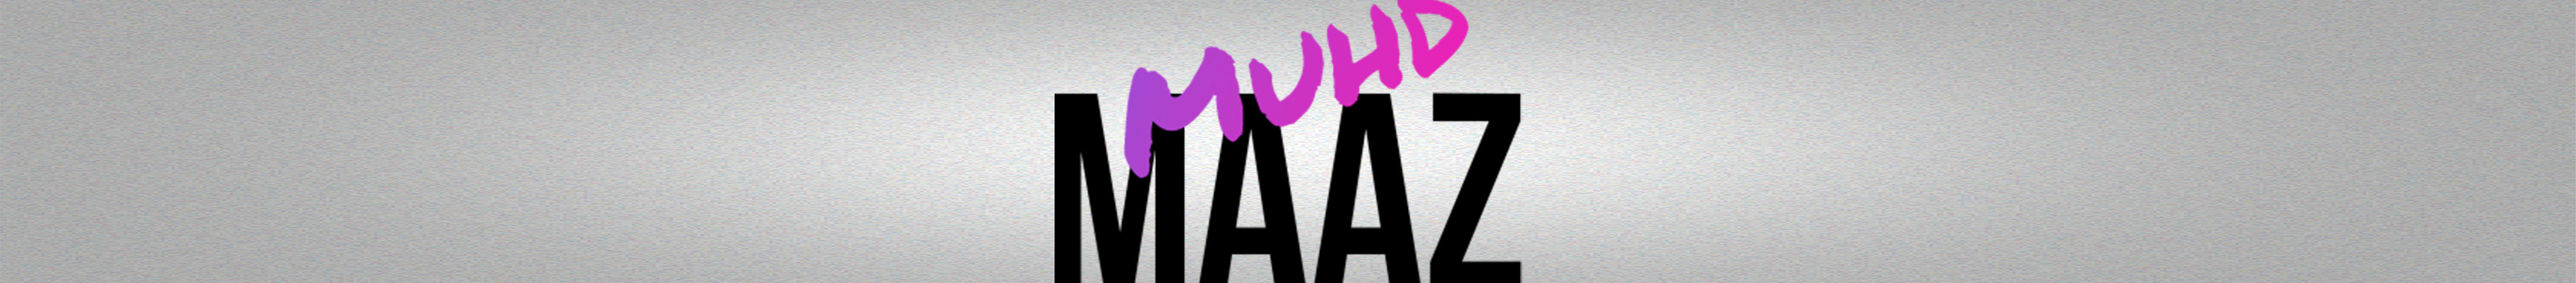 maaz muhammad's profile banner